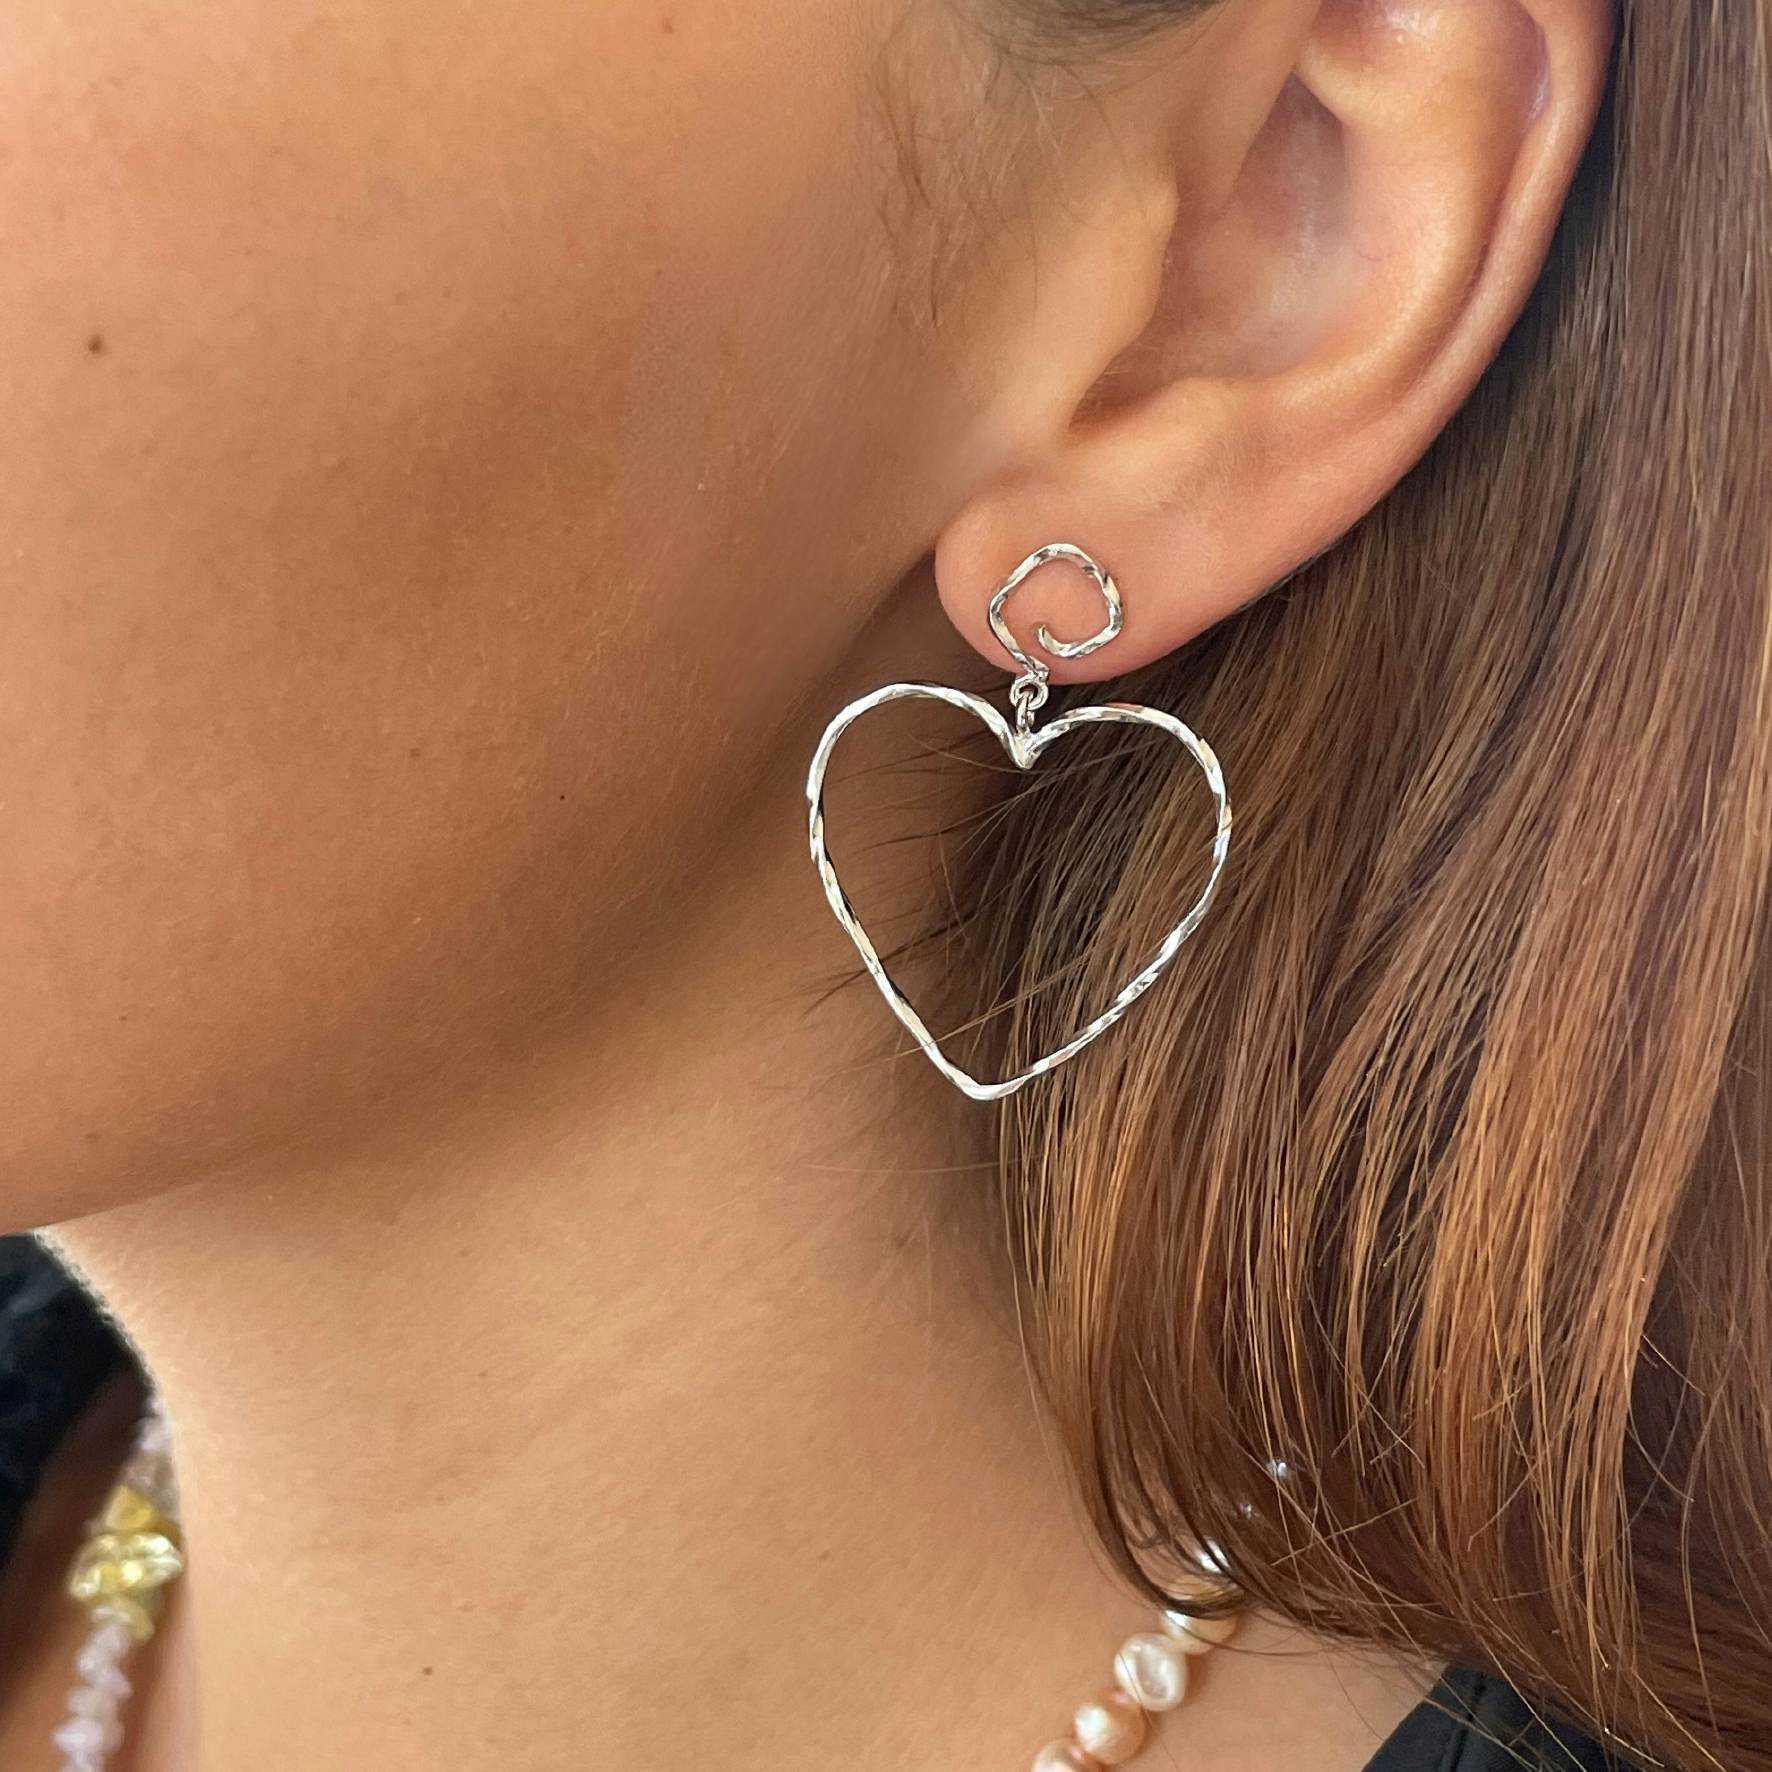 Funky Heart Earring von STINE A Jewelry in Silber Sterling 925